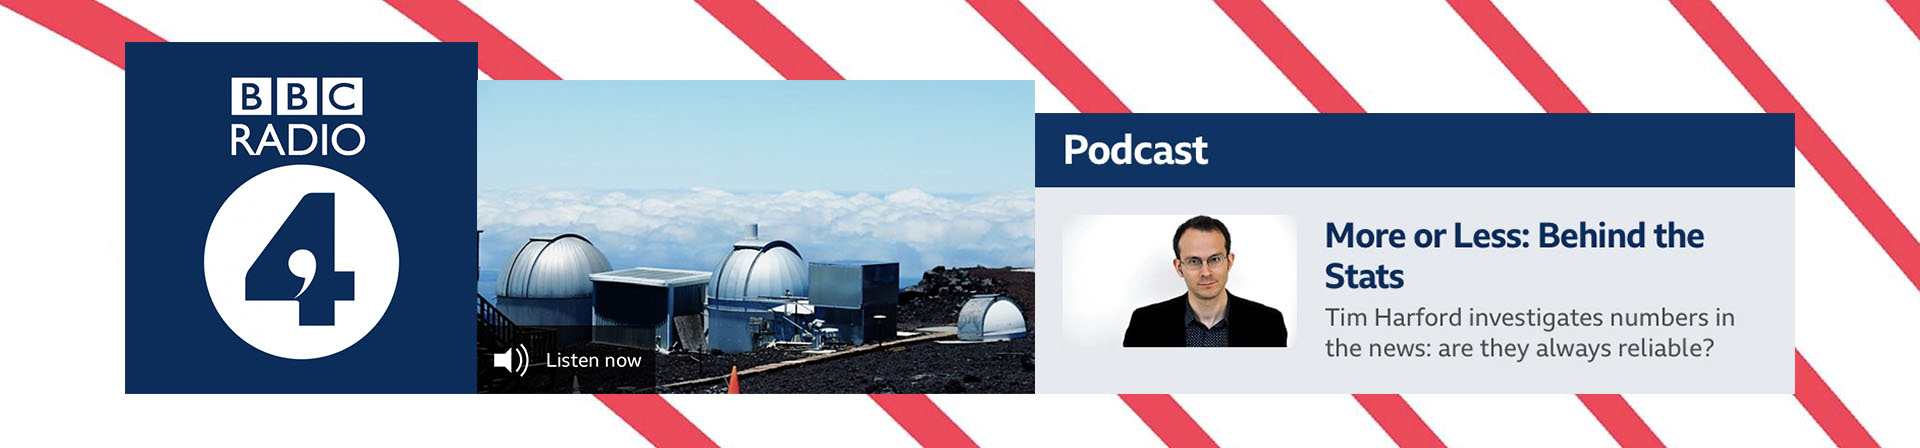 banner with image of BBC radio 4 logo, Mauna Loa Observatory and Tim Harford podcast profile